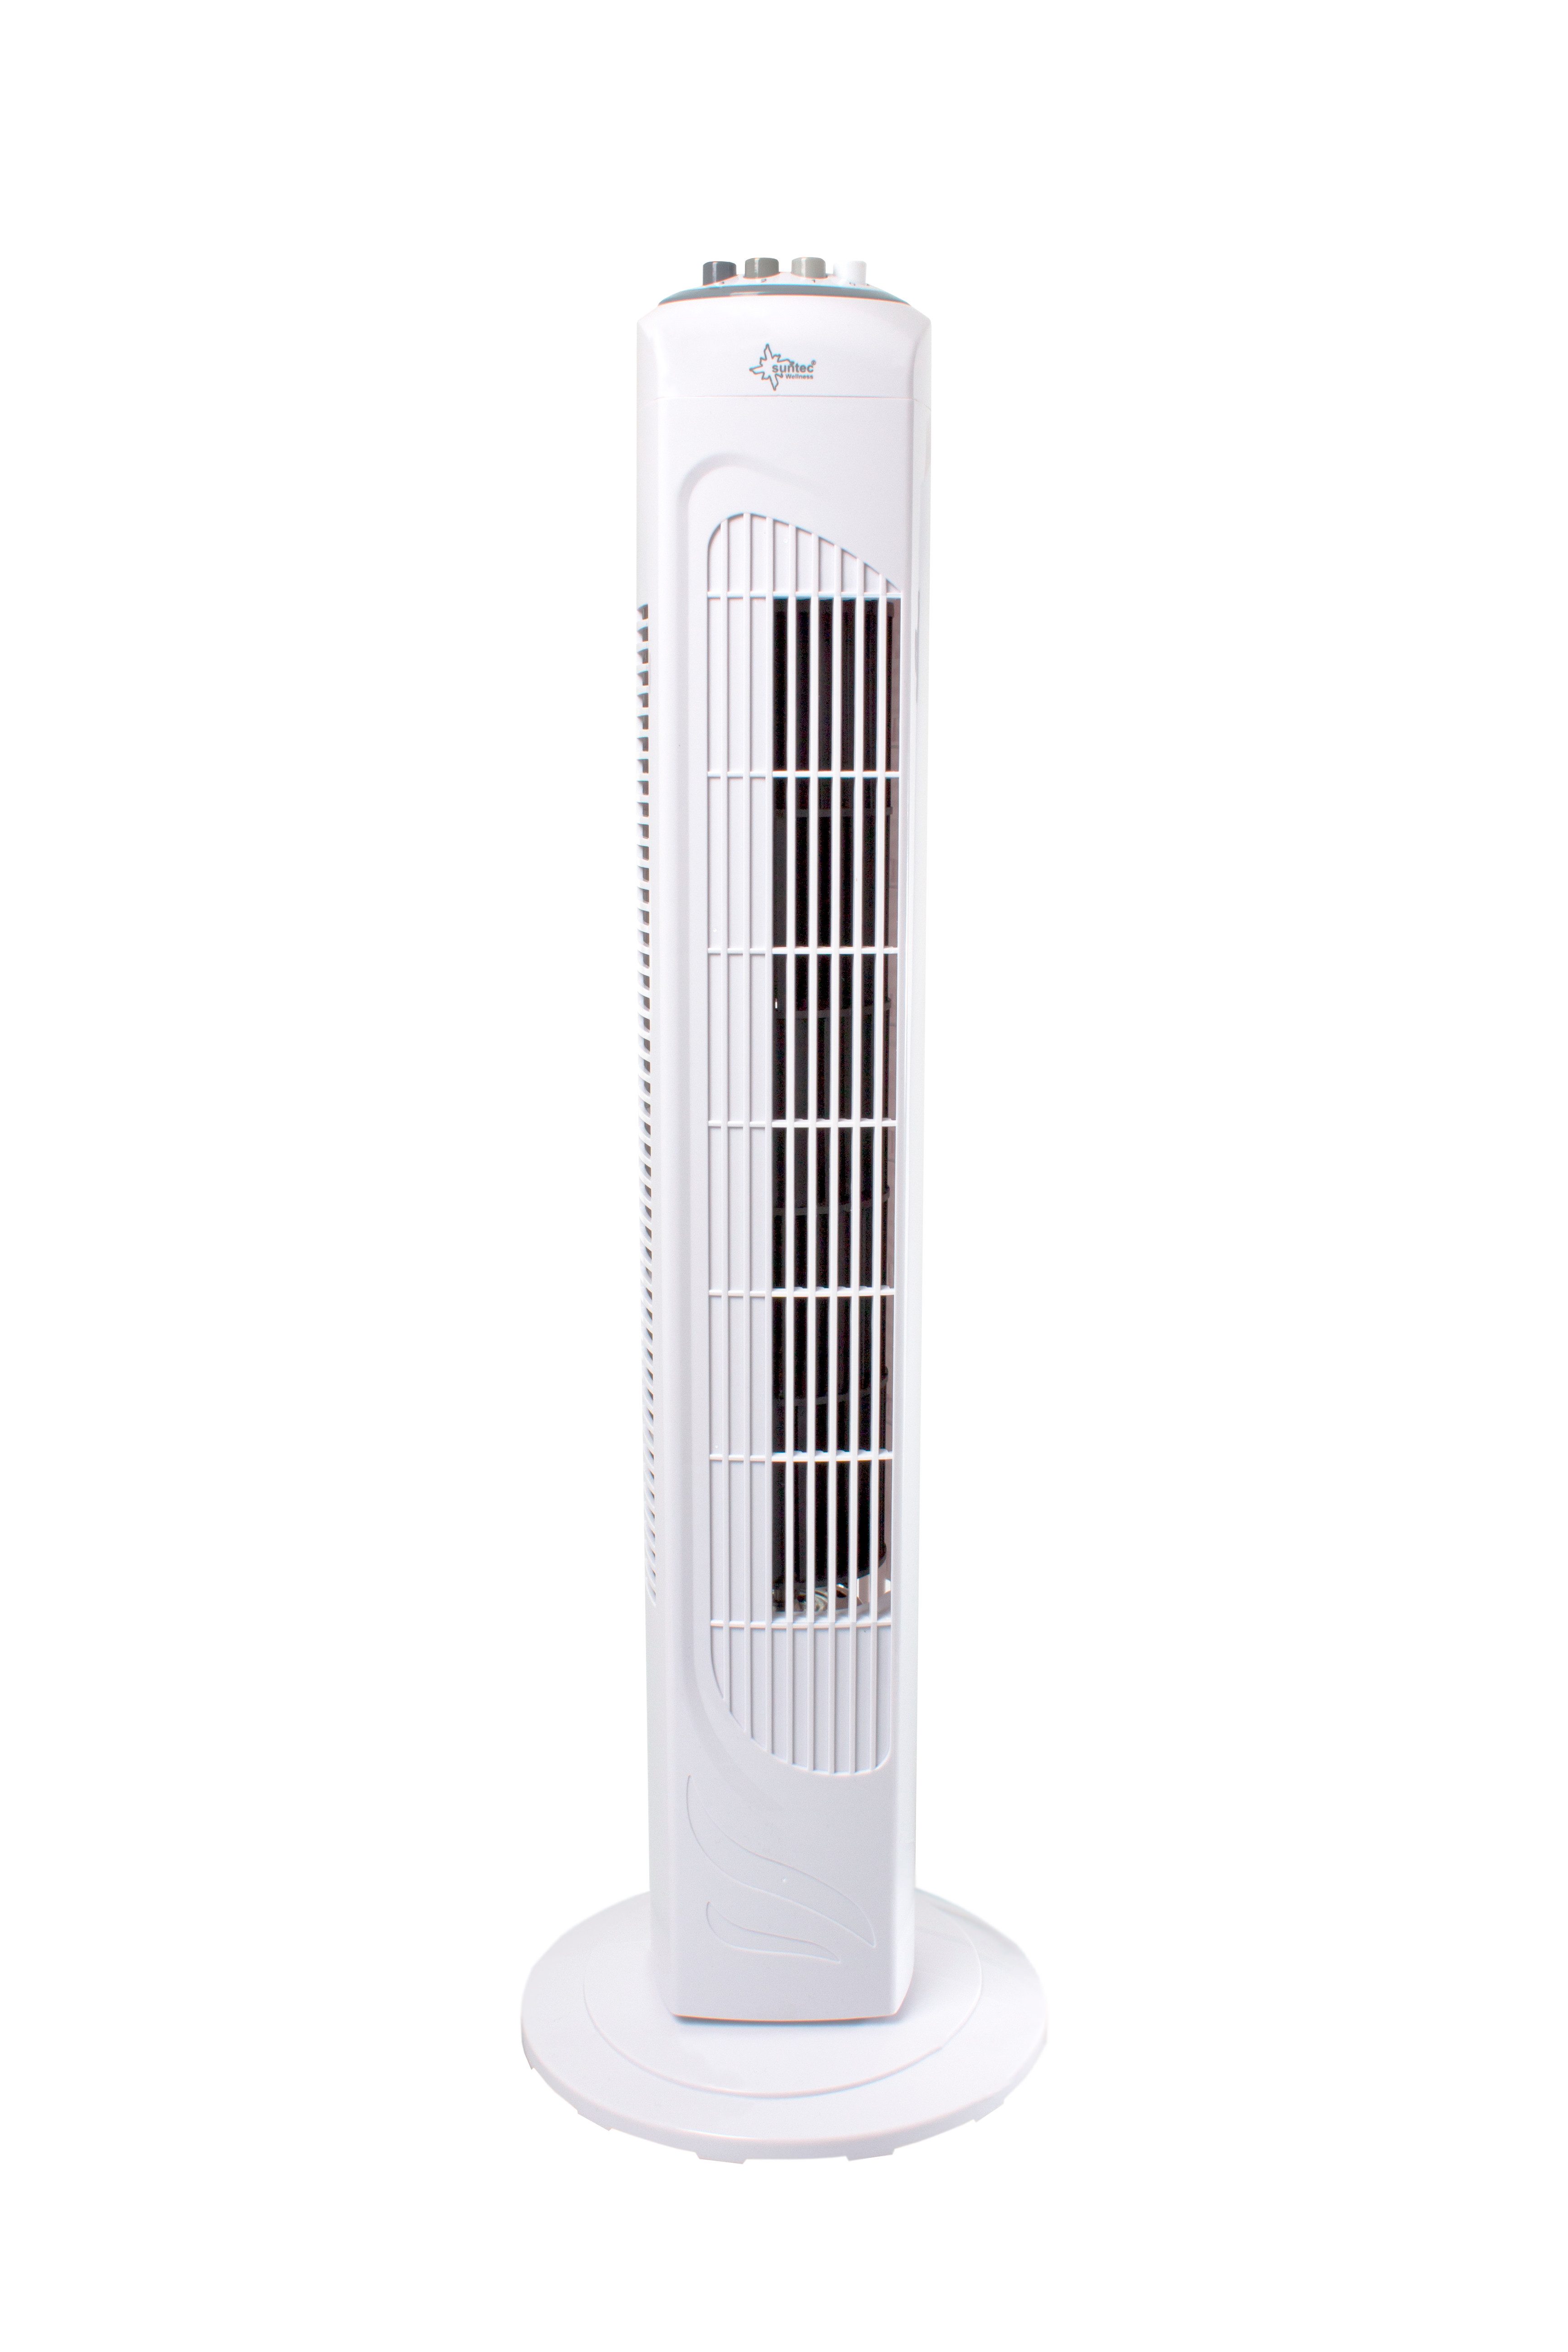 Suntec Wellness Turmventilator CoolBreeze 7400 TV, Ventilator inkl. Soft-Touch-Bedienung, Fan, 45 Watt